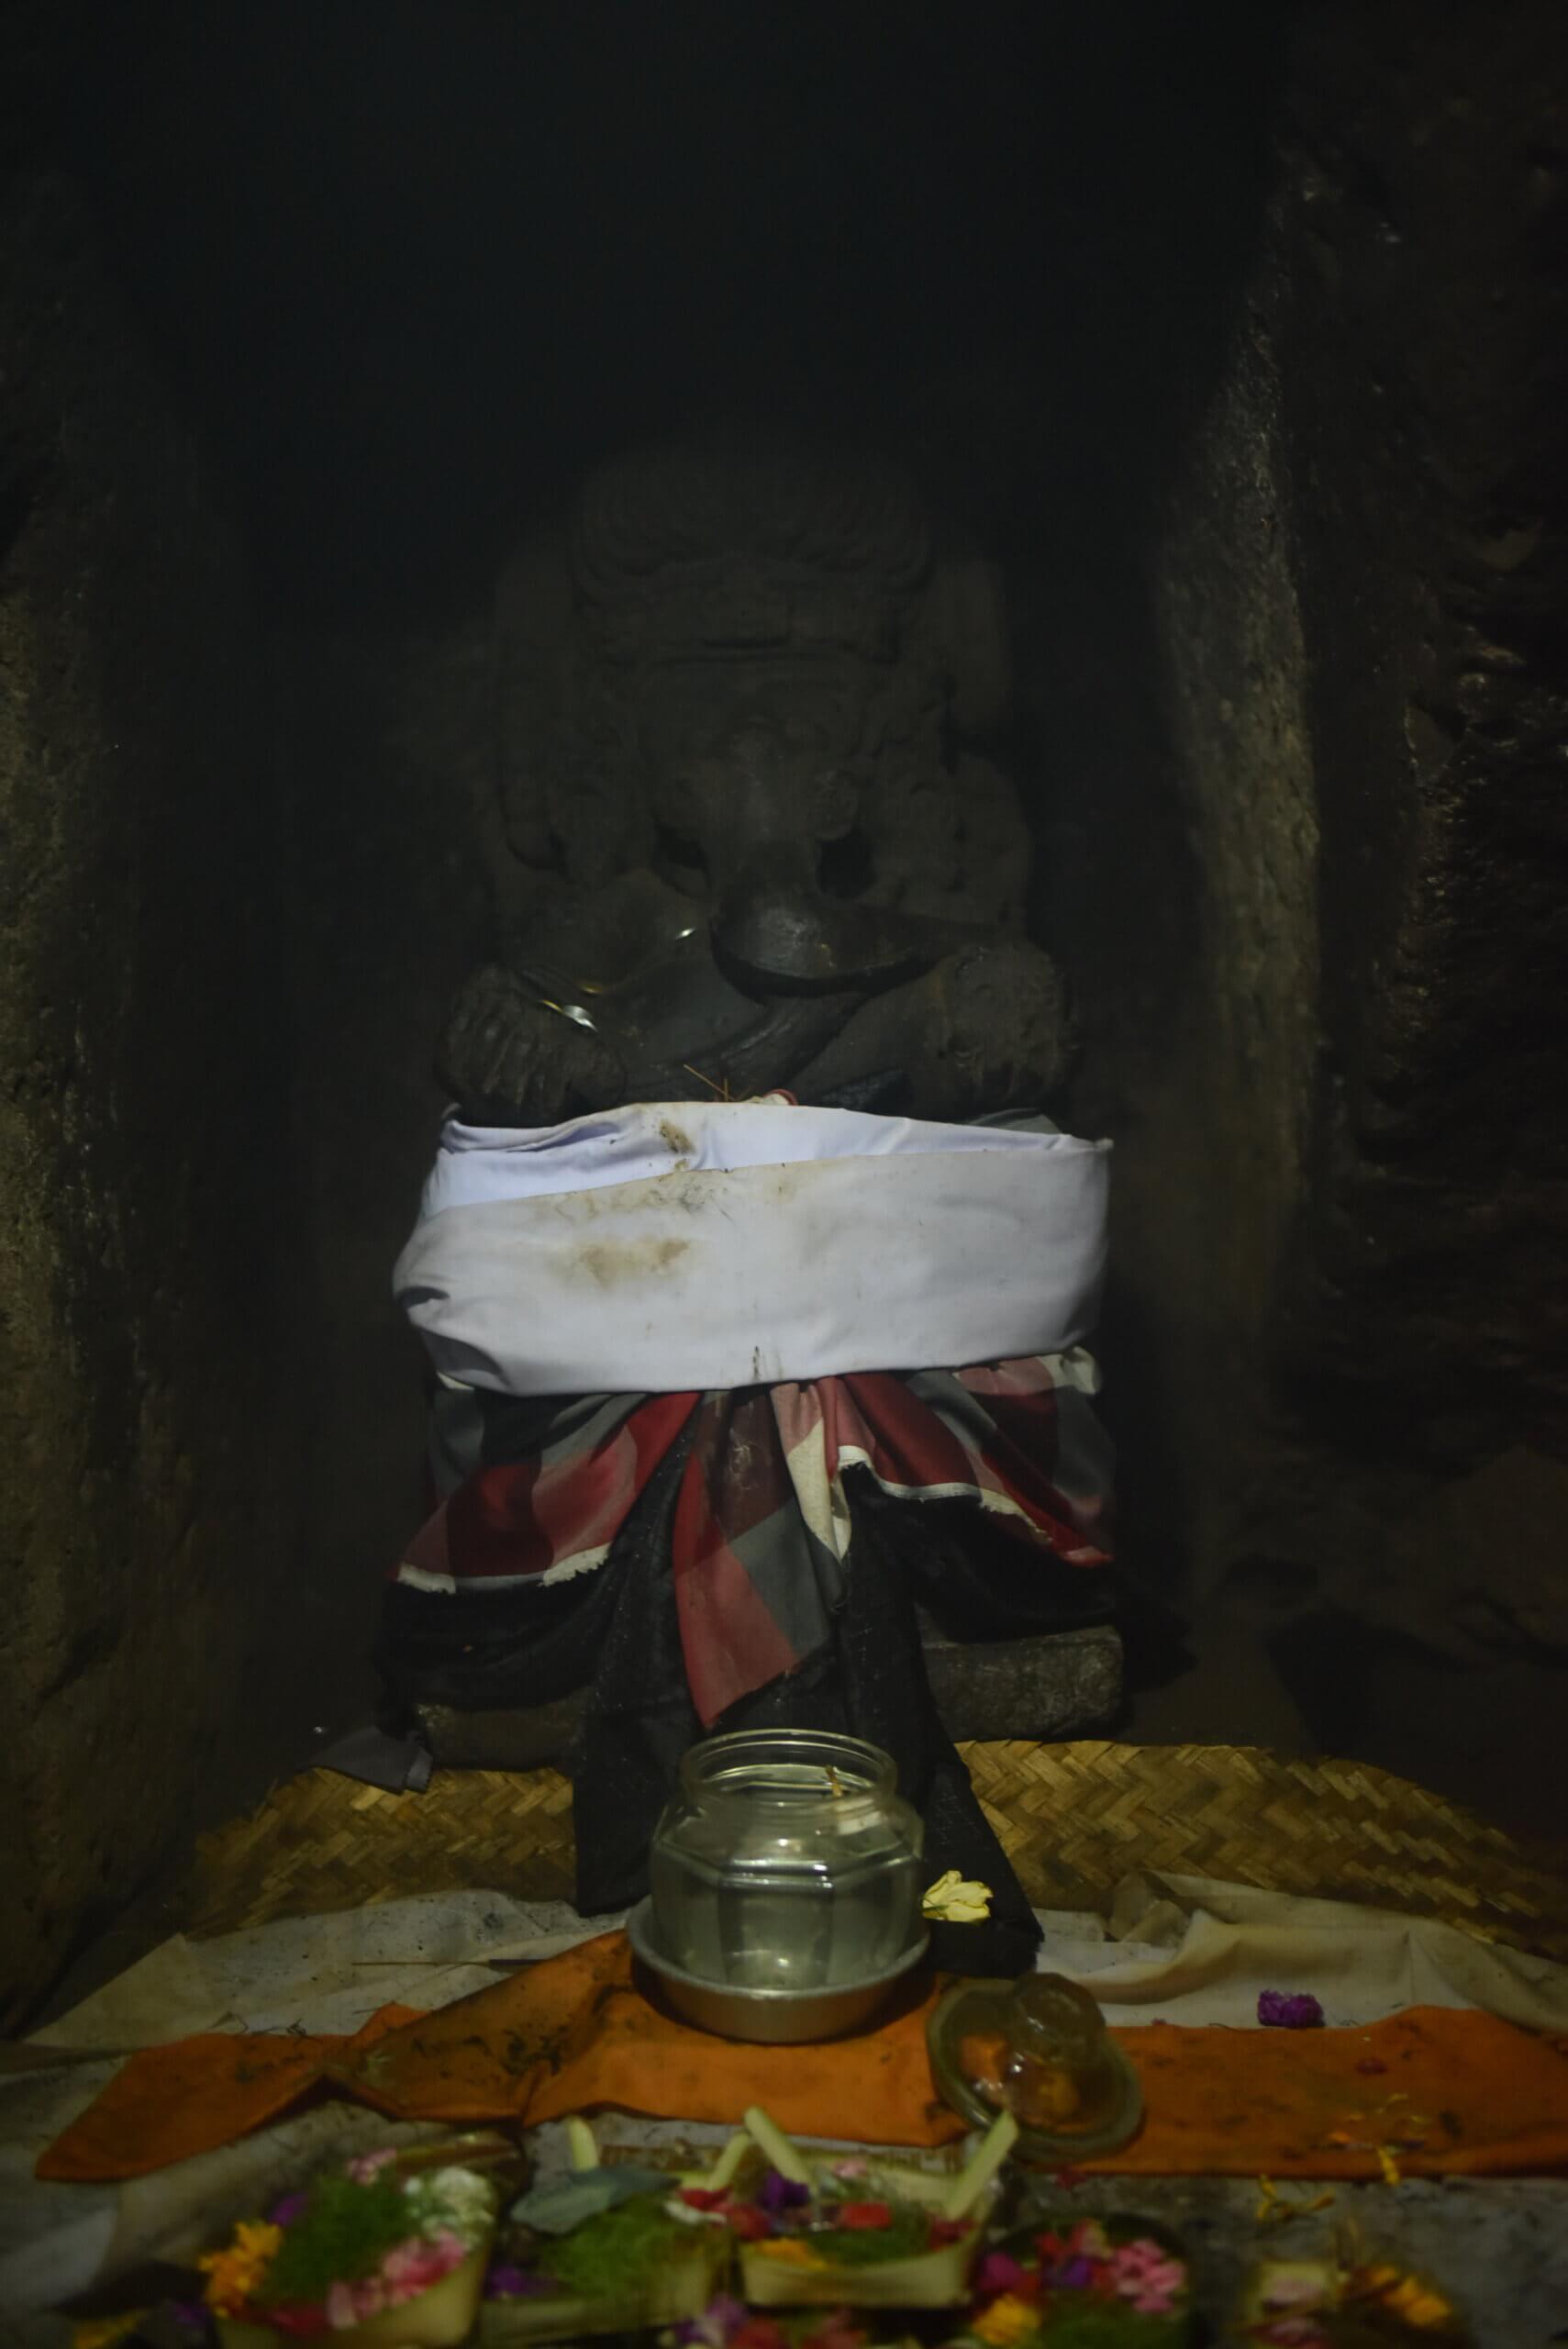 Statue de Ganesh